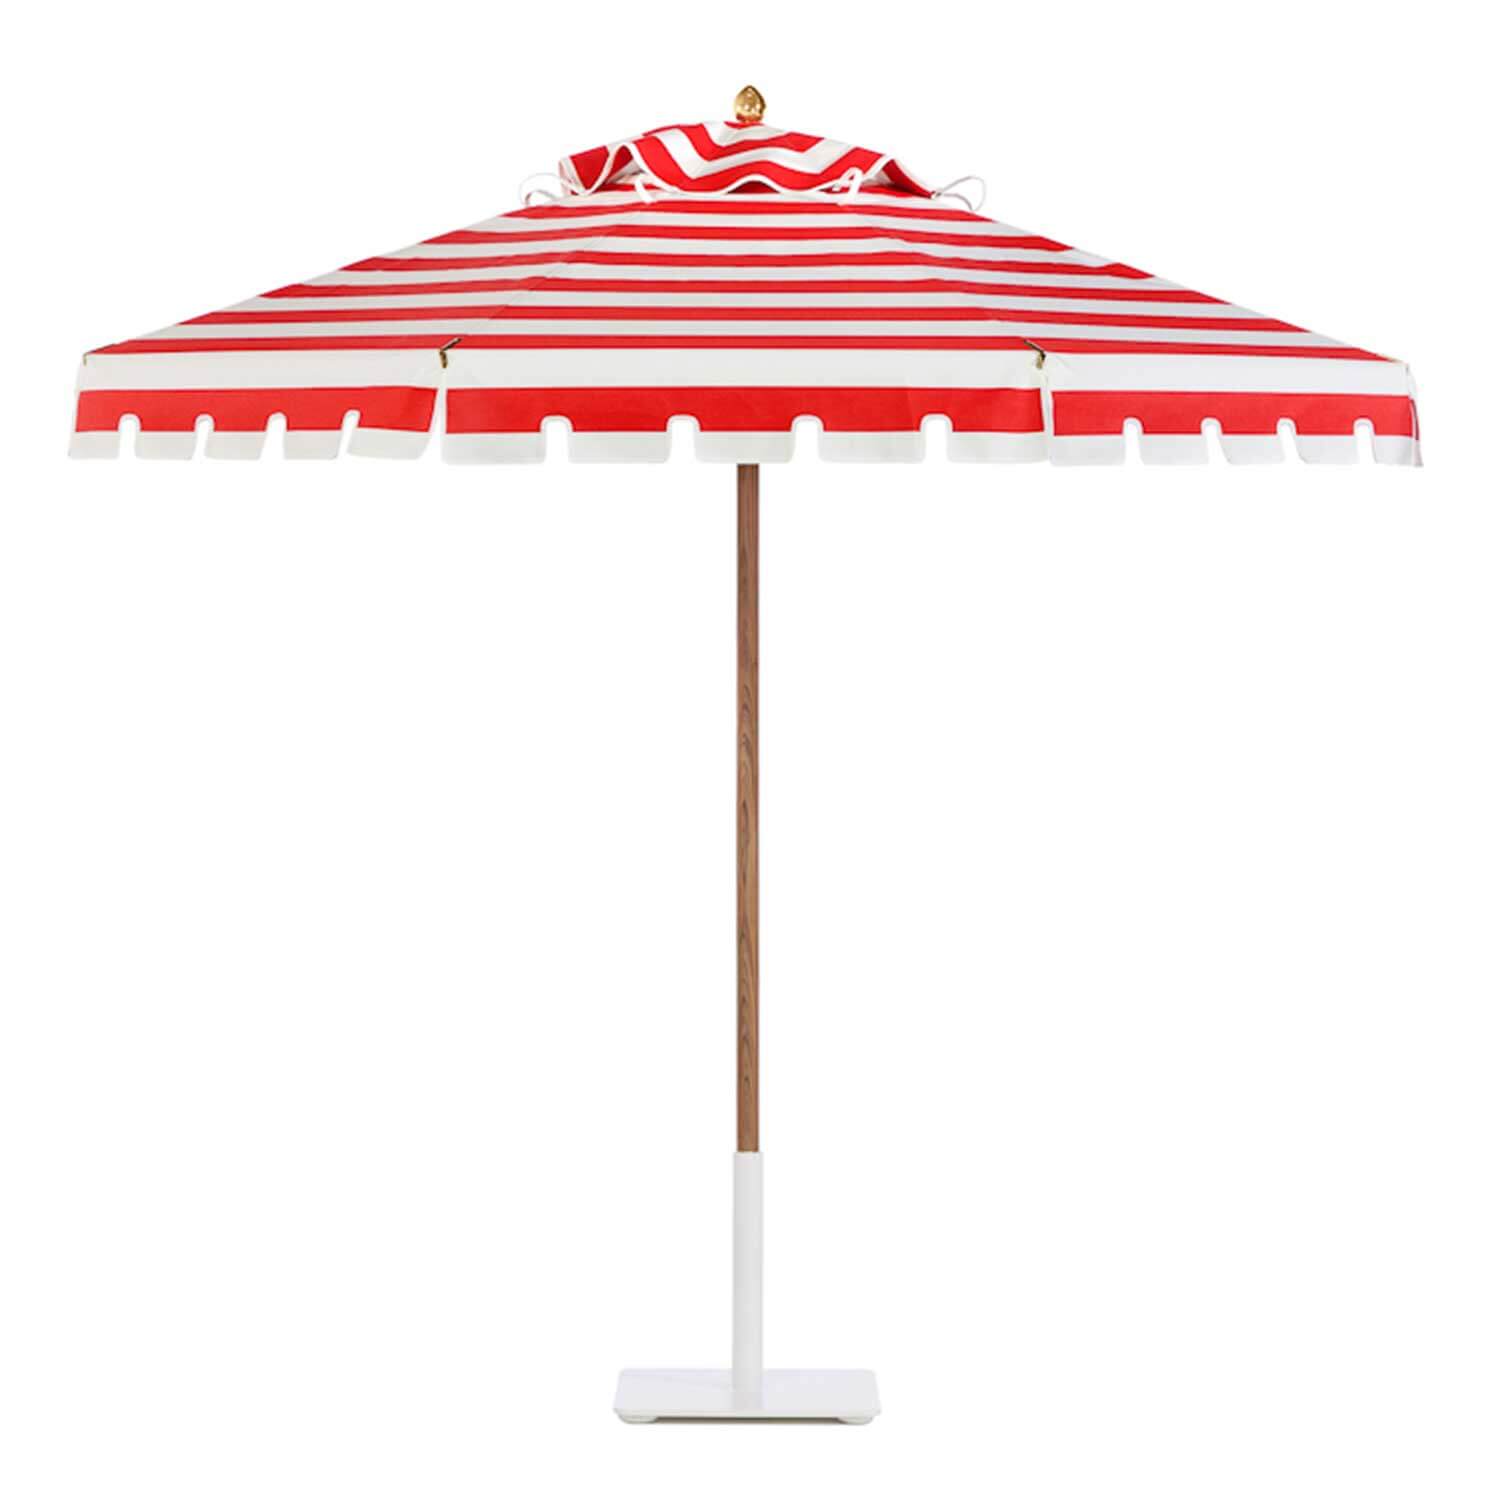 Cabana Red Stripe Umbrella Image